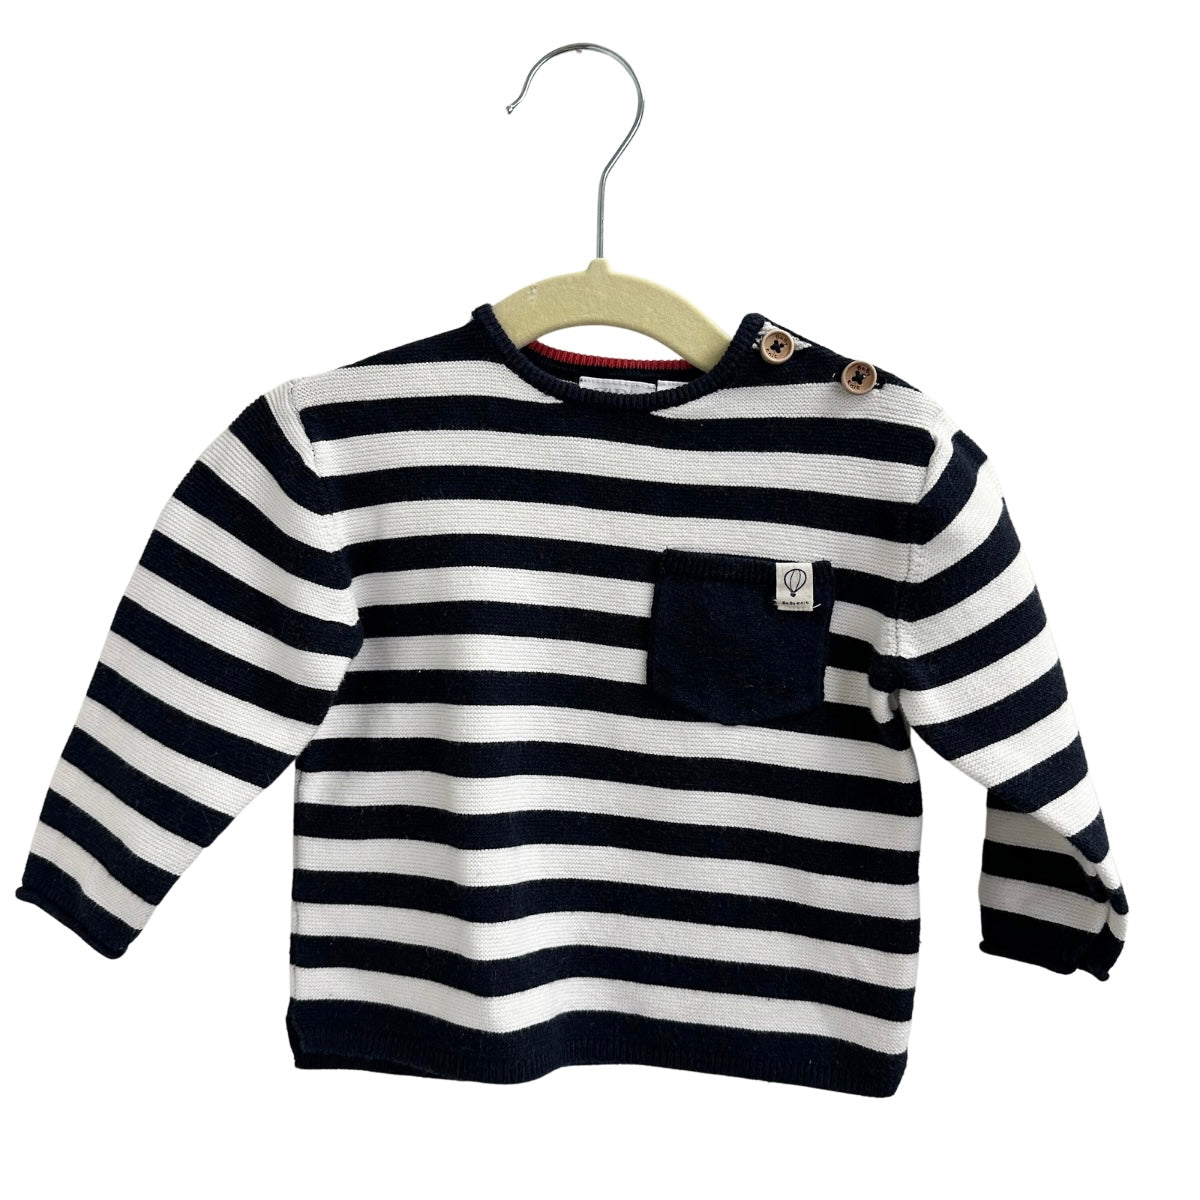 Zara Dark Navy Striped Sweater